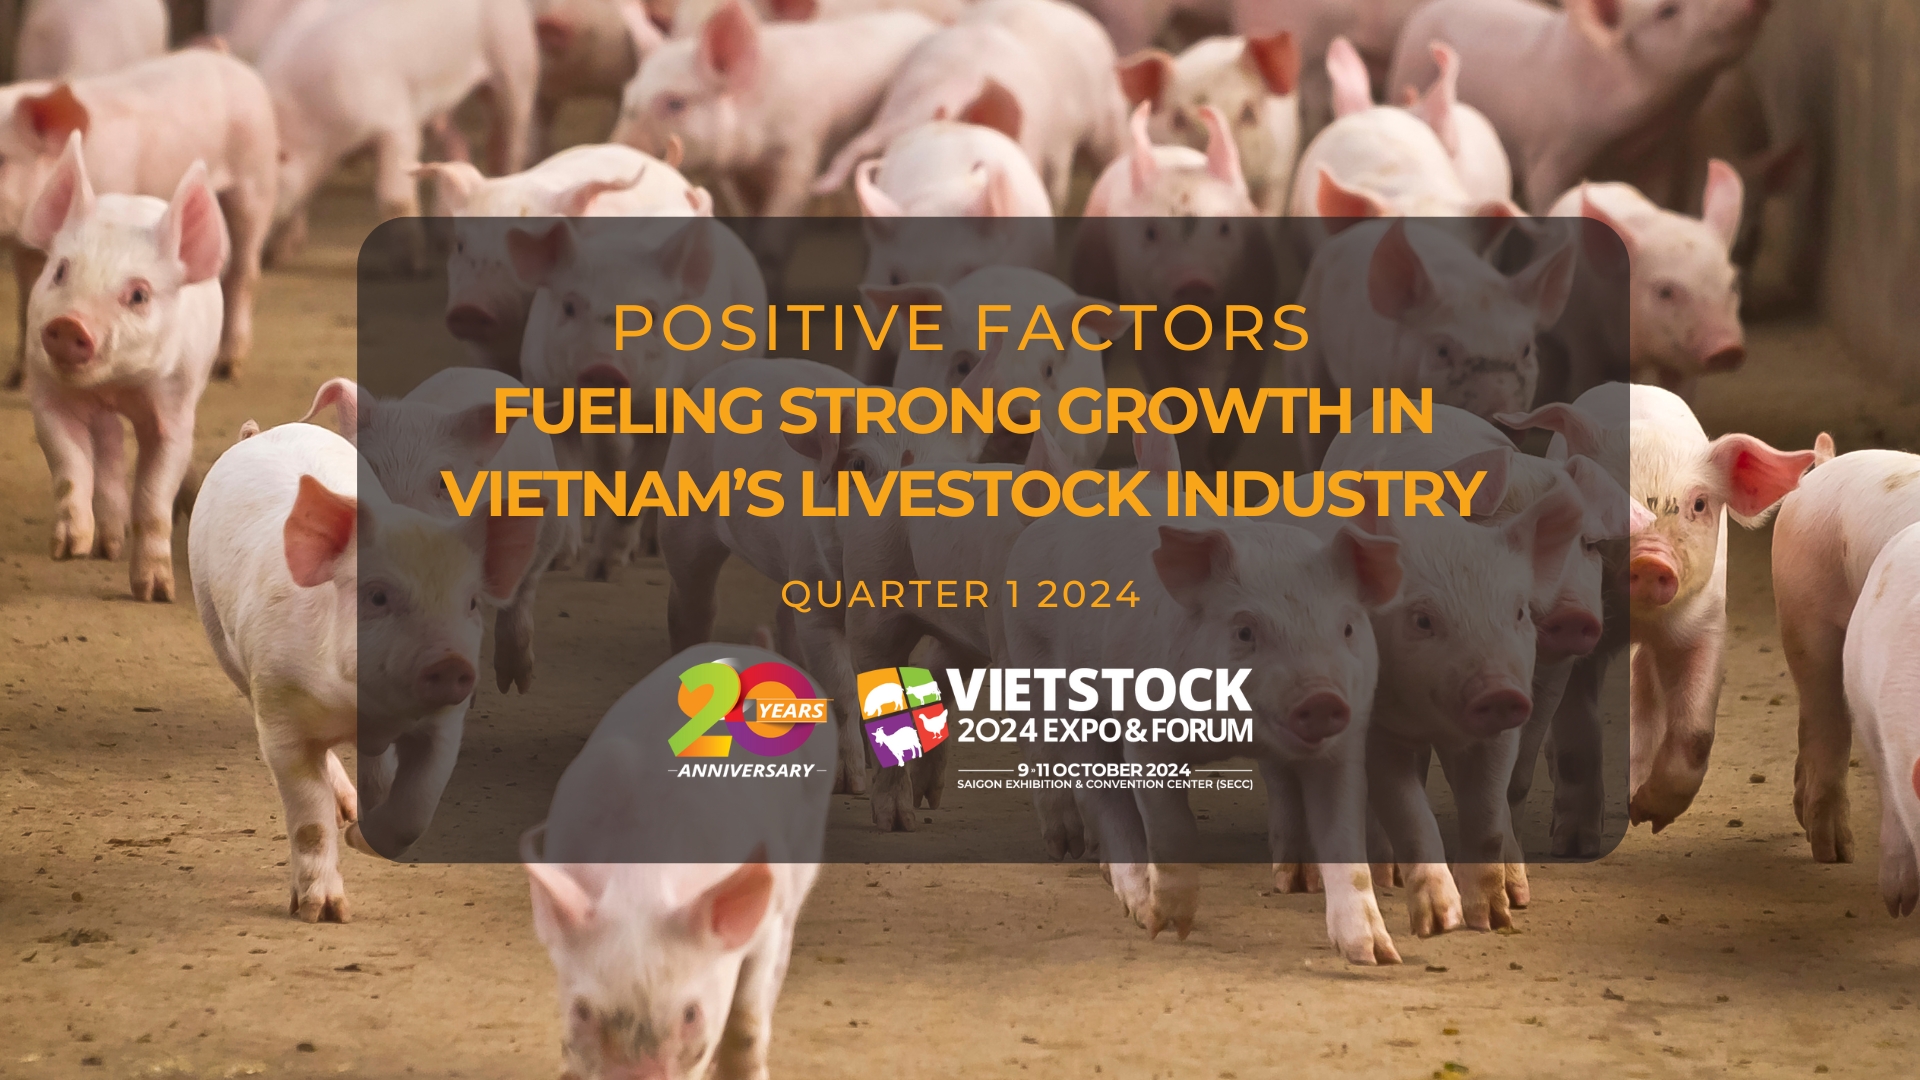 POSITIVE FACTORS FUELING STRONG GROWTH IN VIETNAM’S LIVESTOCK INDUSTRY IN Q1/2024